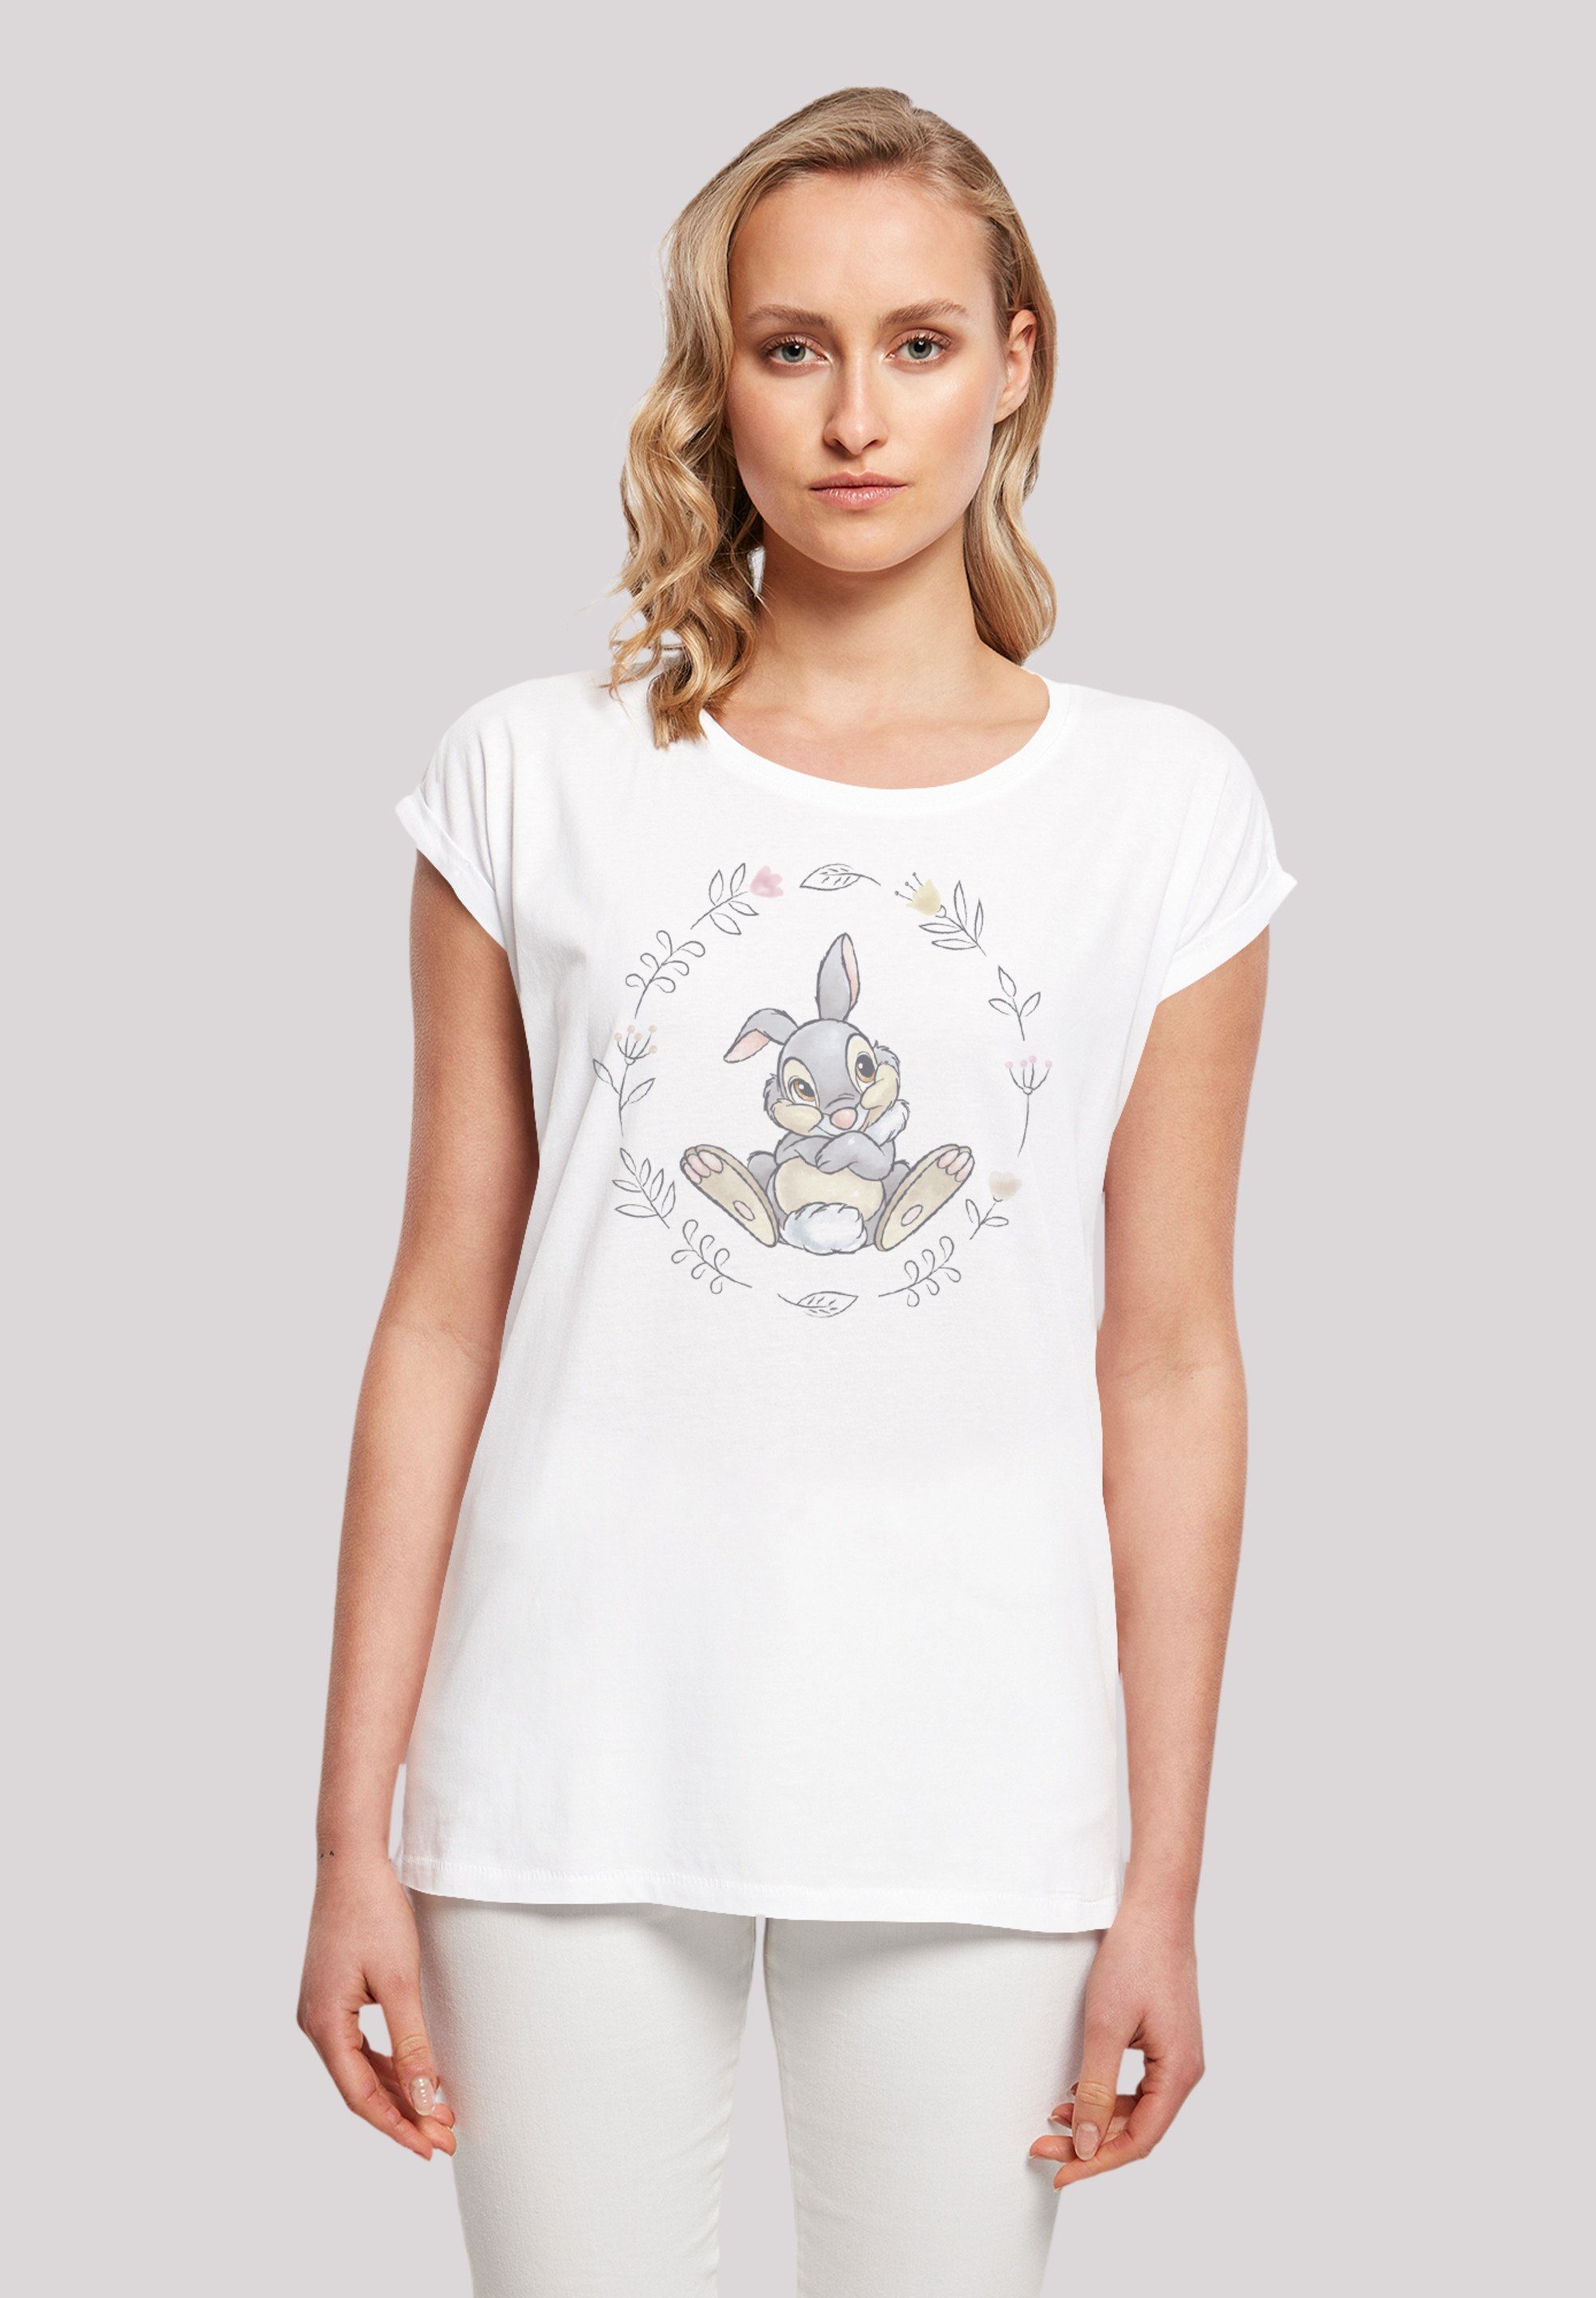 F4NT4STIC T-Shirt Qualität Disney Premium Bambi Klopfer